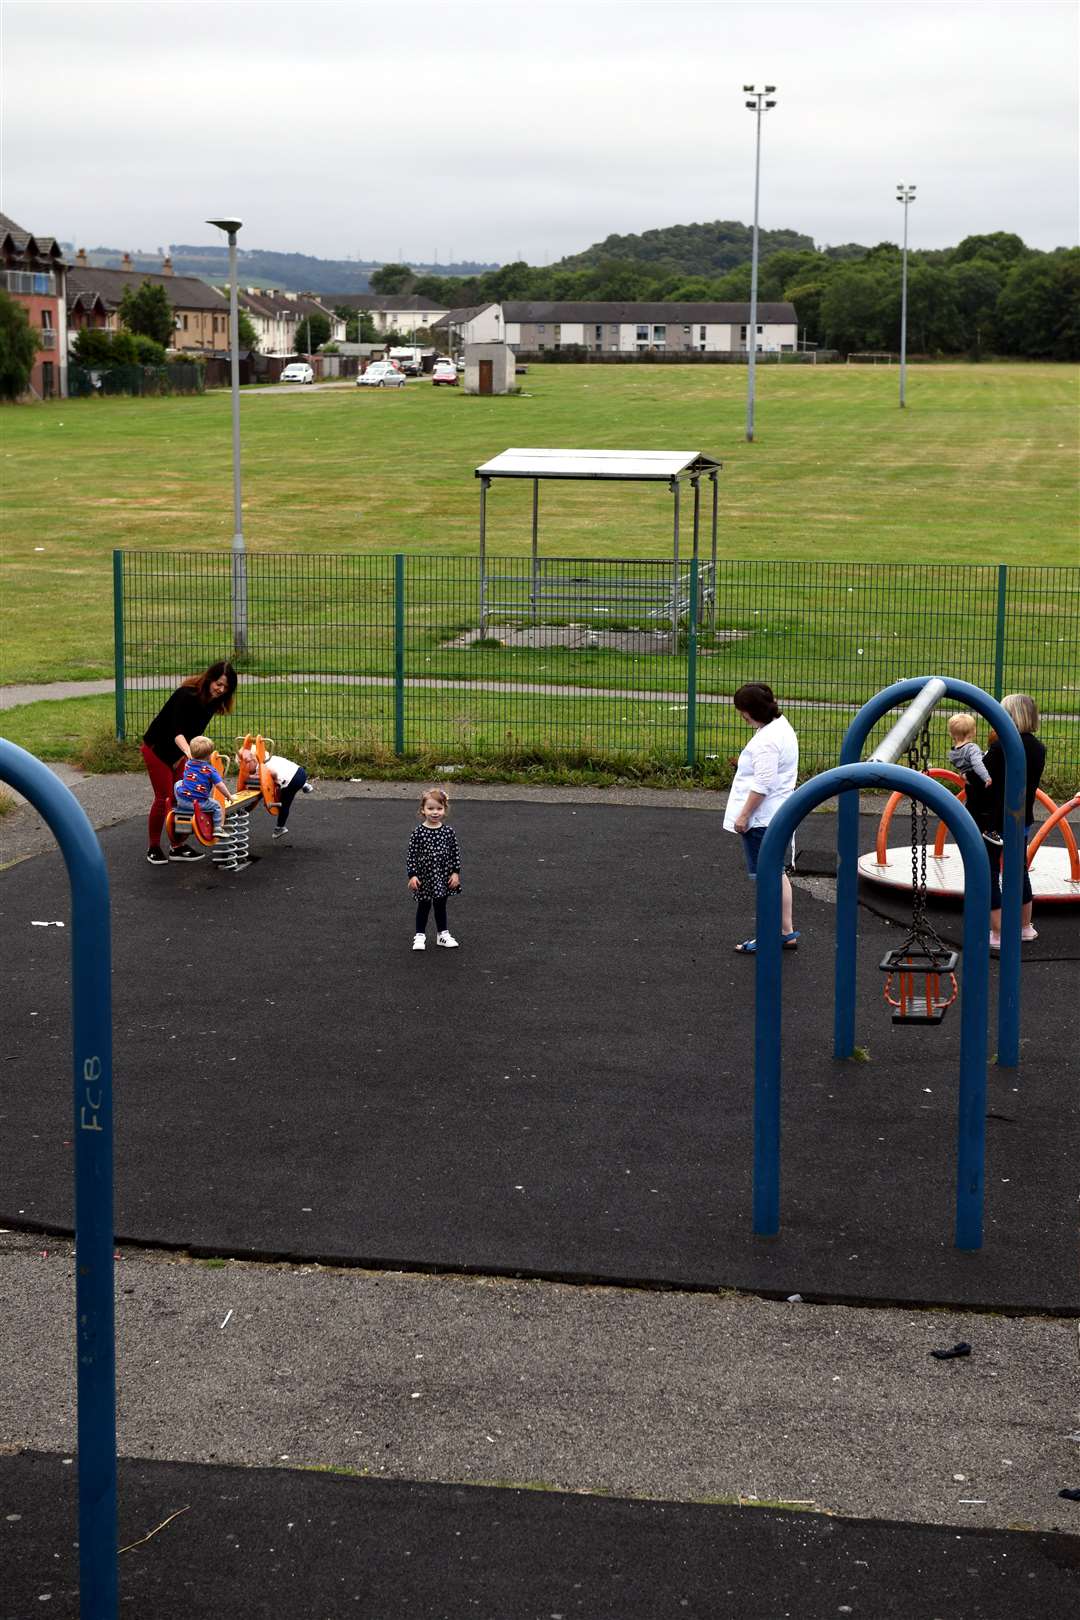 Dalneigh playpark. Picture: James Mackenzie.